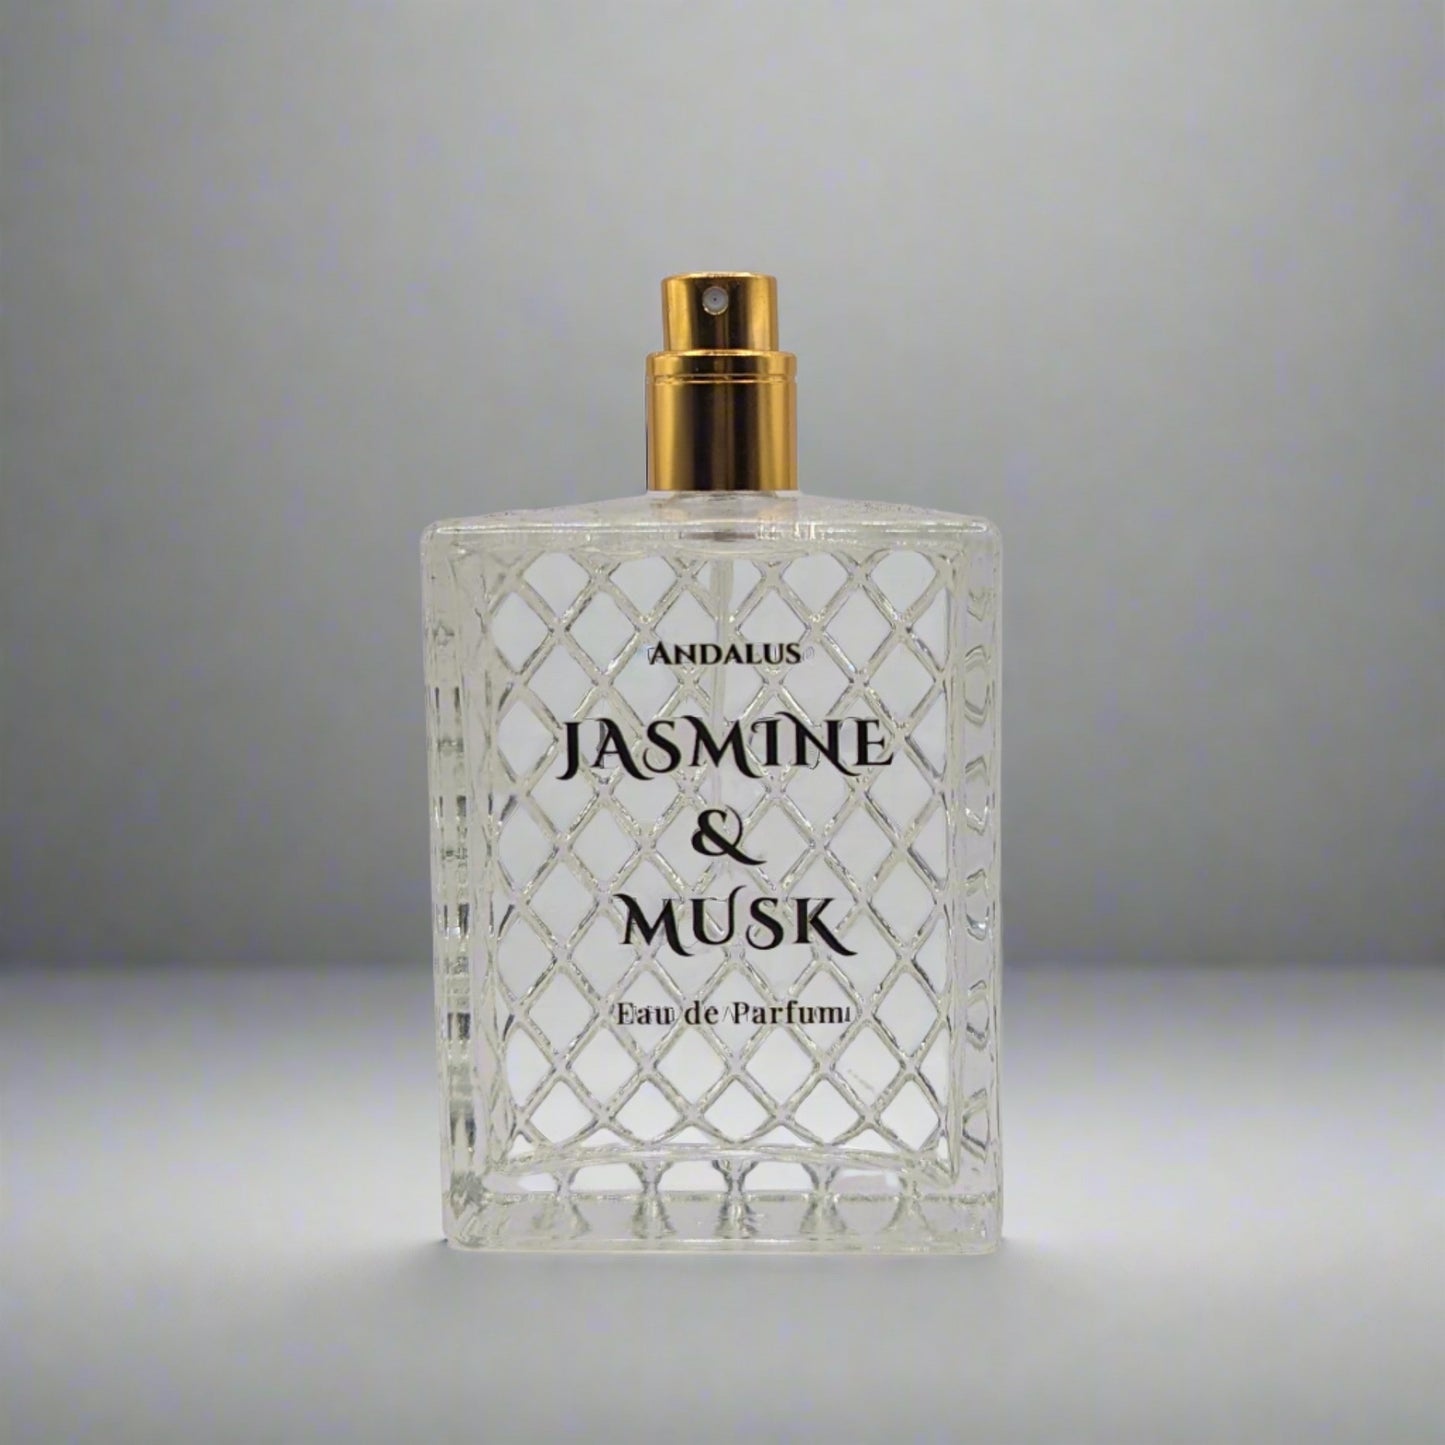 Jasmine & Musk 100mL Perfume Bottle